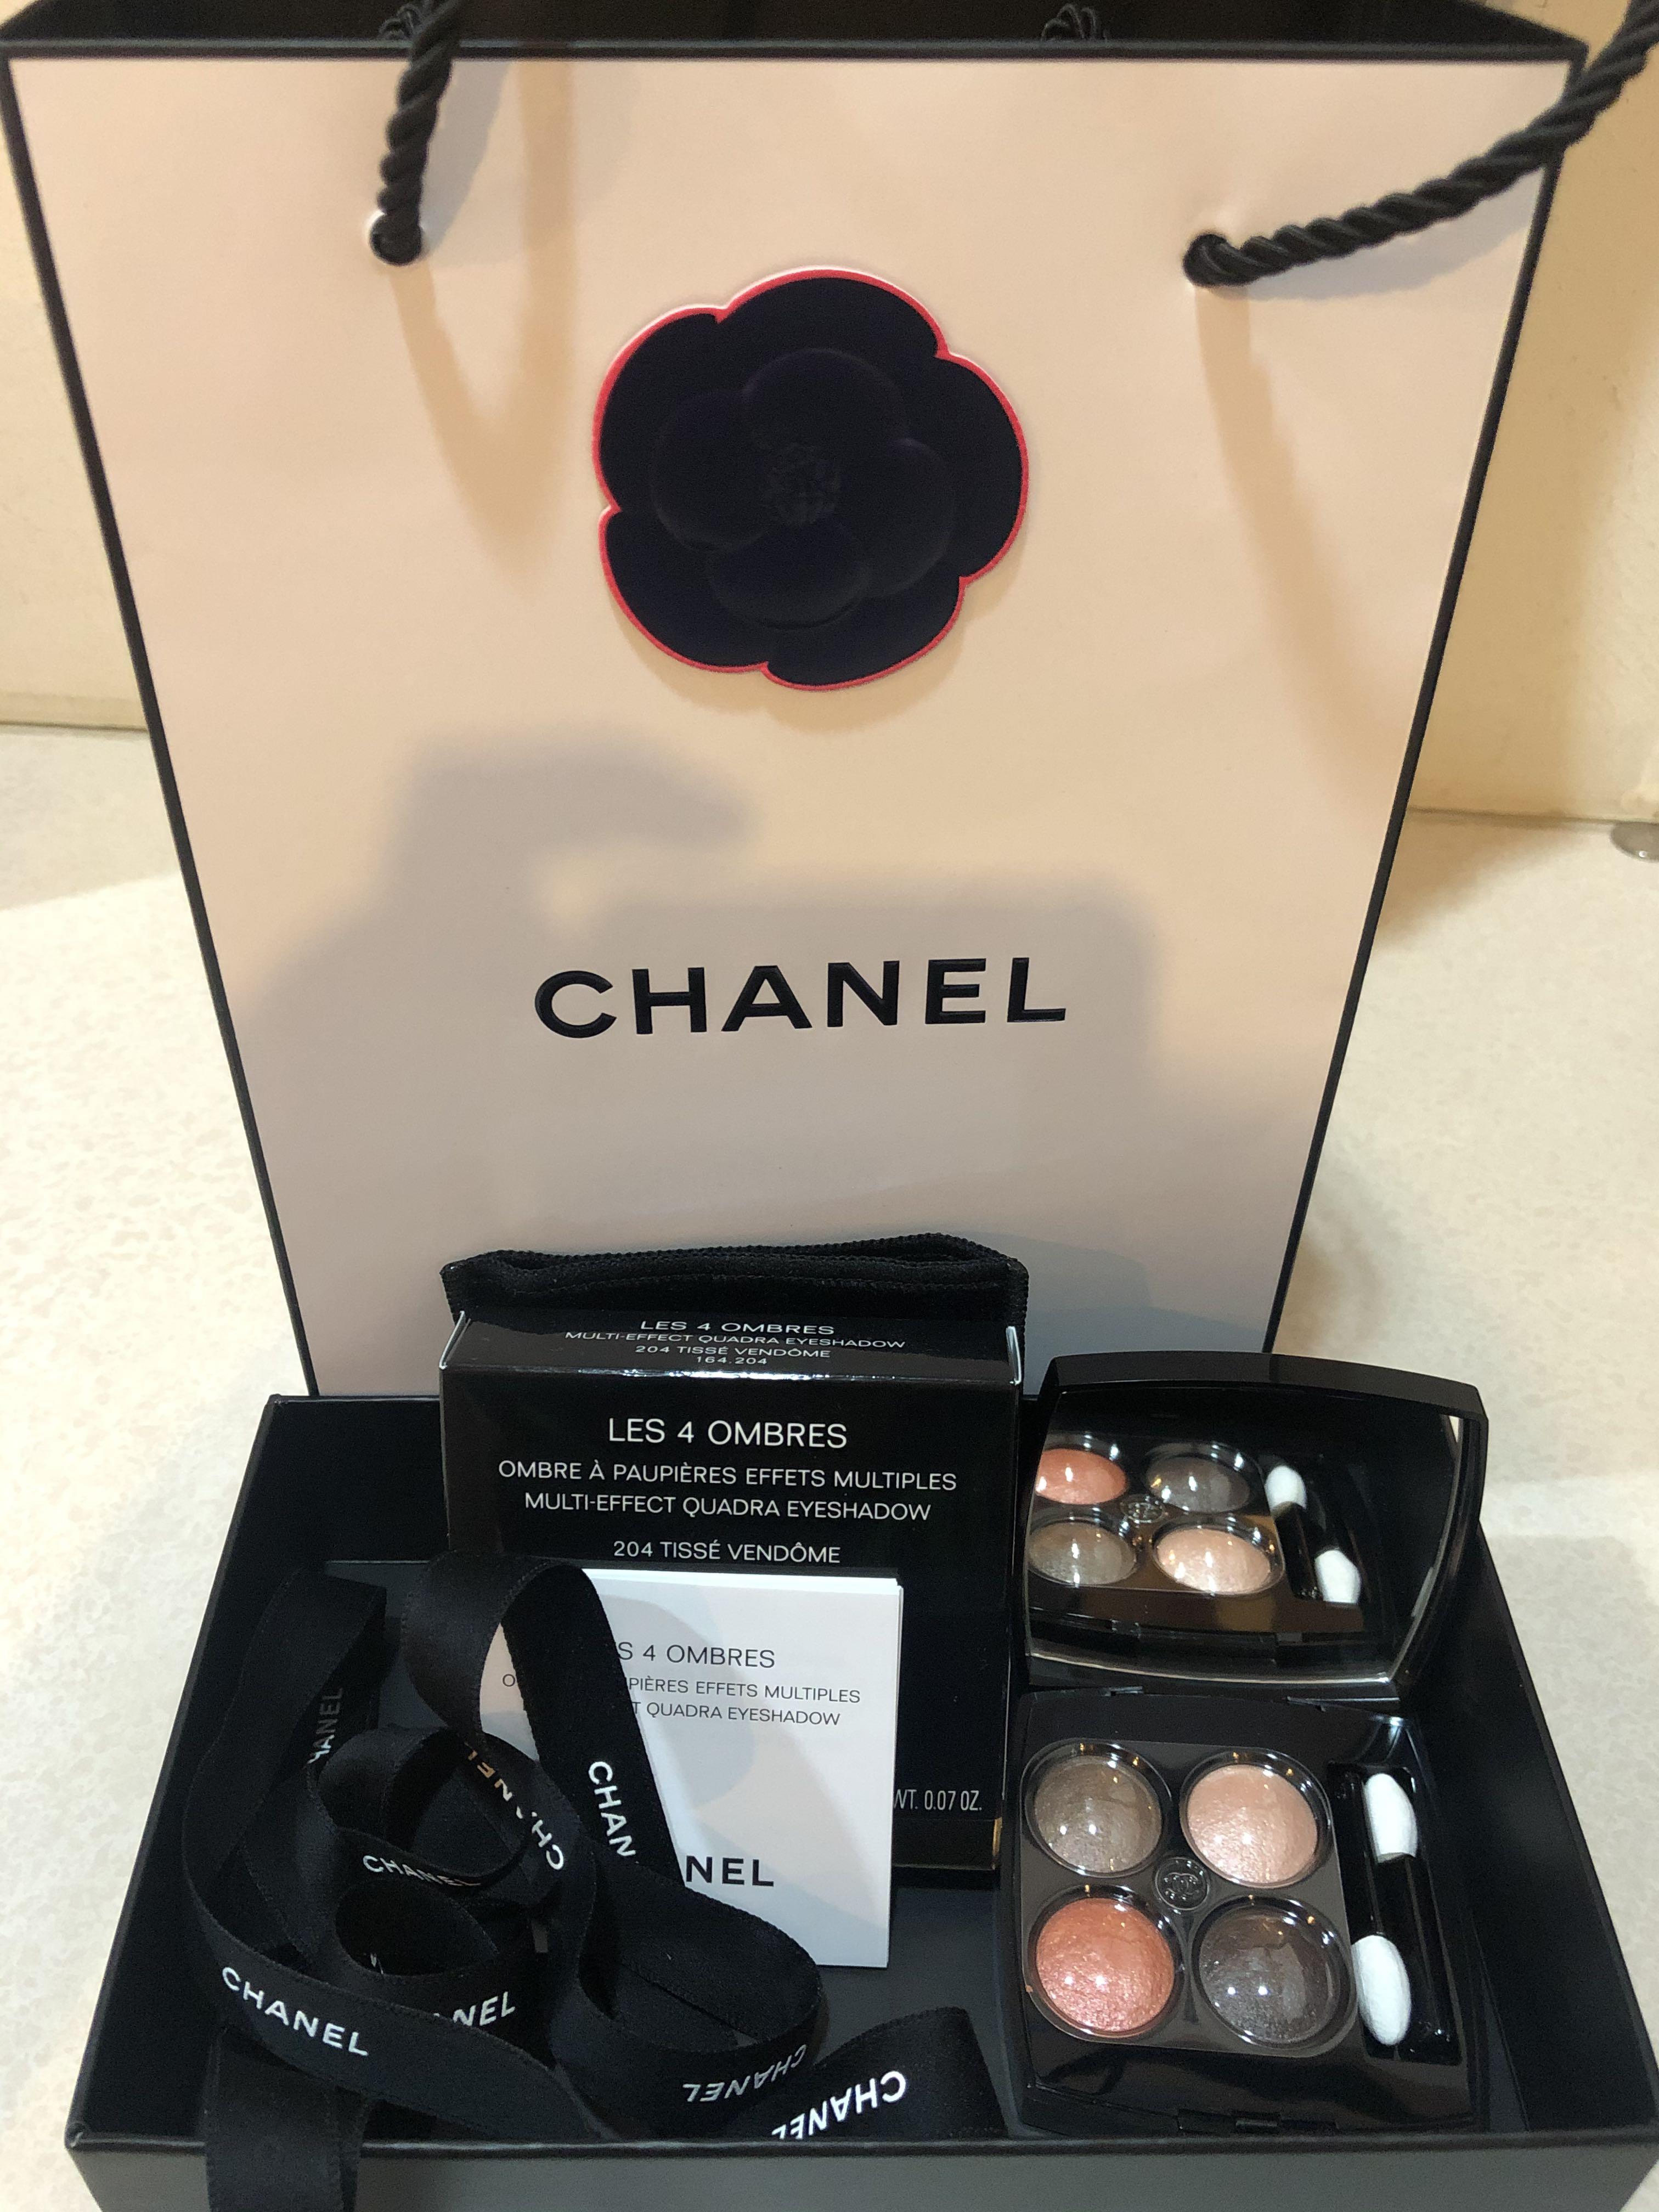 Ori Chanel Eyeshadow(204 tisse vendome) Best Seller!, Beauty & Personal Care, Fragrance Deodorants on Carousell